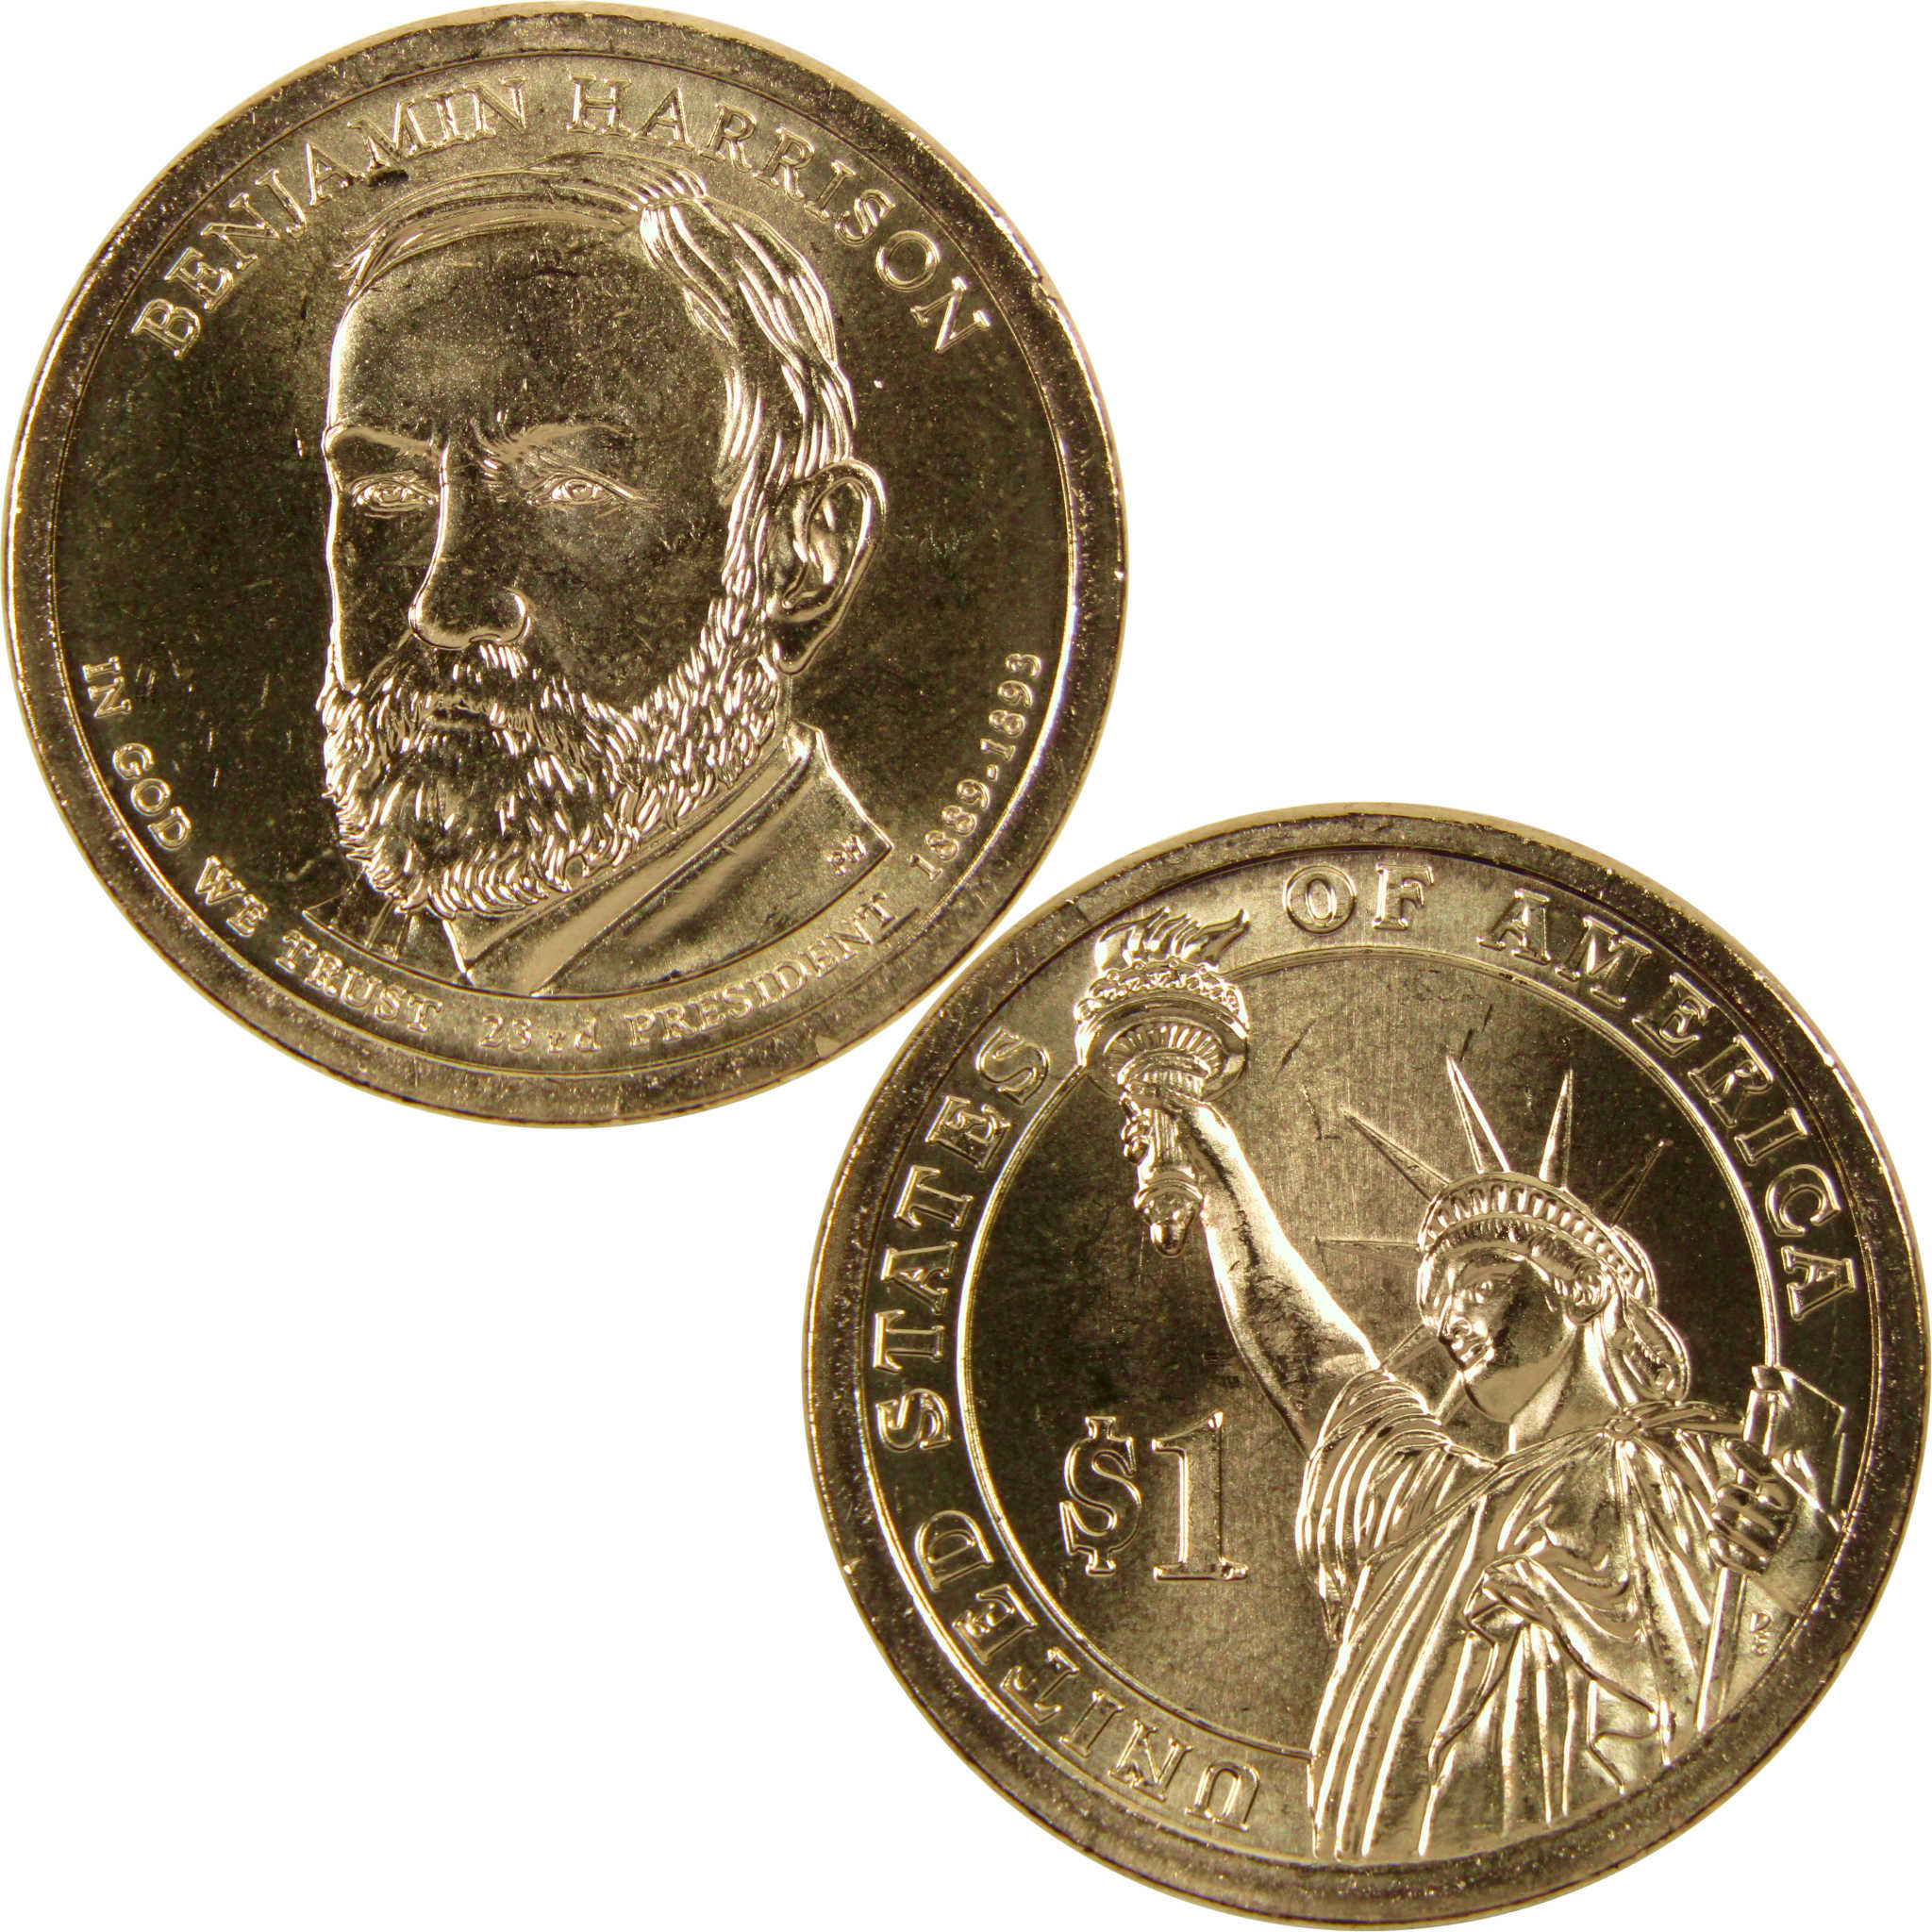 2012 P Benjamin Harrison Presidential Dollar BU Uncirculated $1 Coin